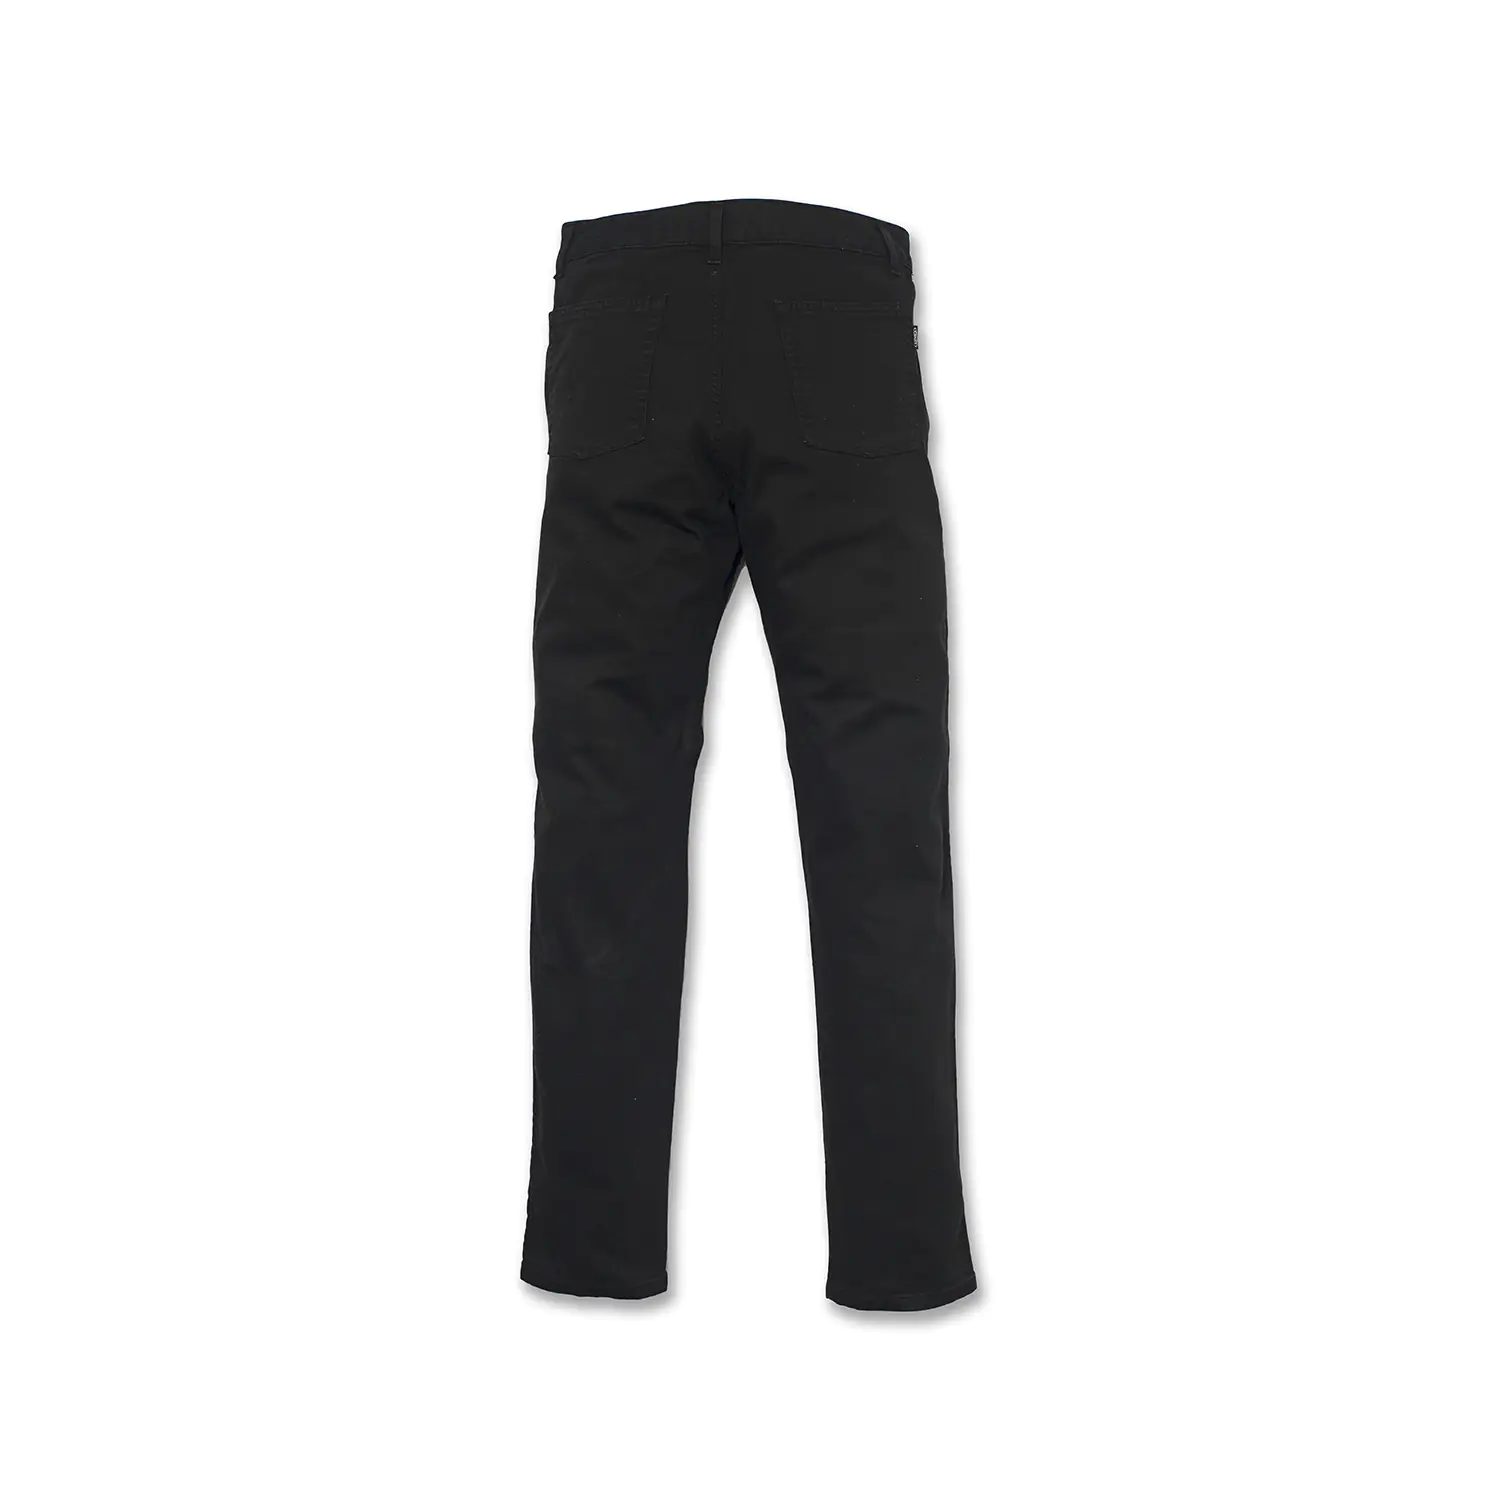 dmd.eu - CHINO BLACK DMD – Pants Chino Black – back